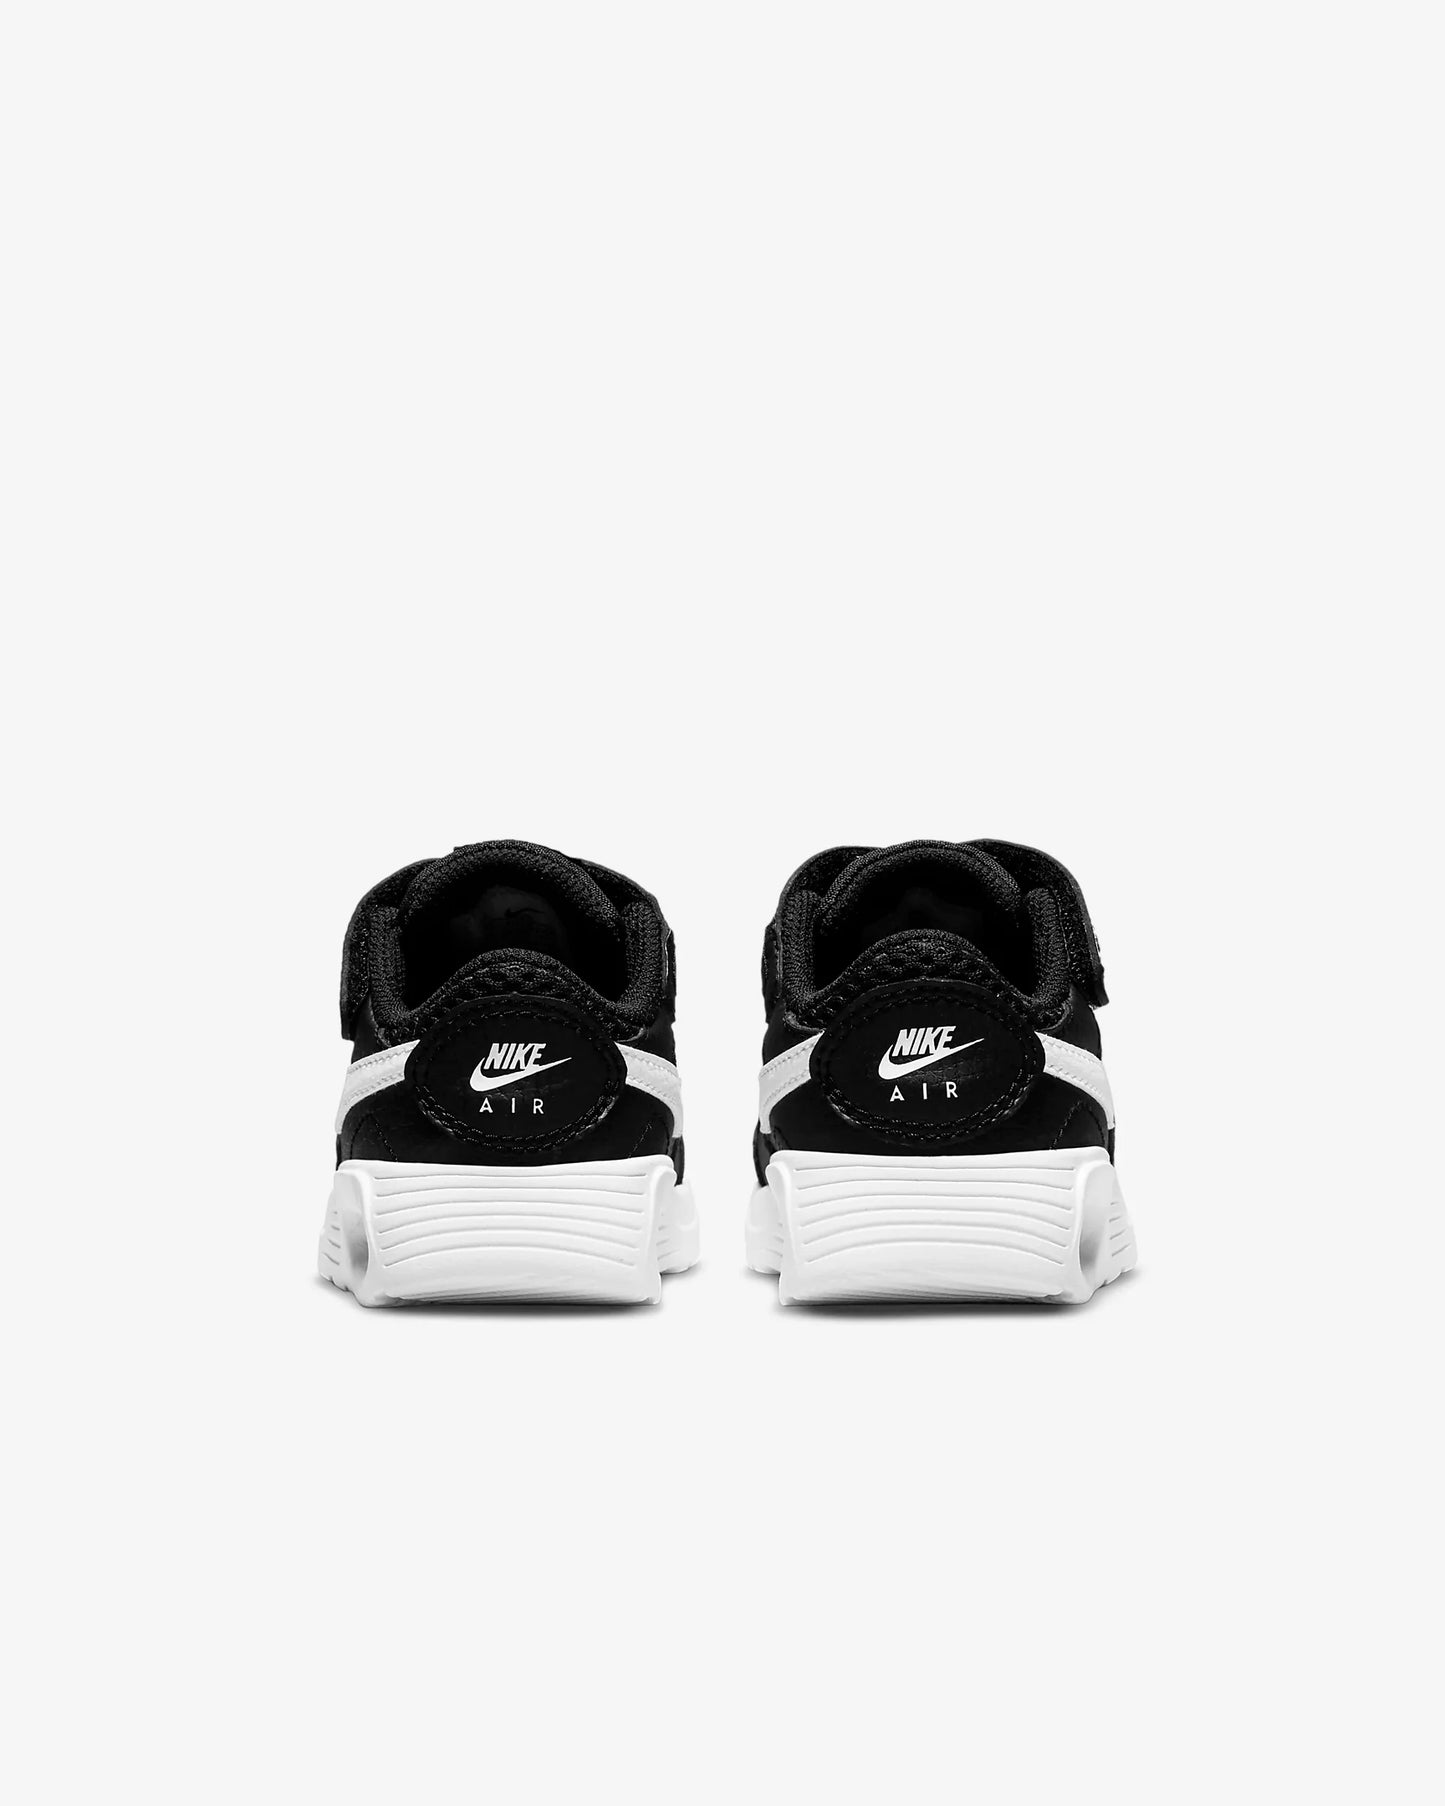 - Nike Air Max SC Toddler Black/White - (CZ5361-002) - AMS - R1L9